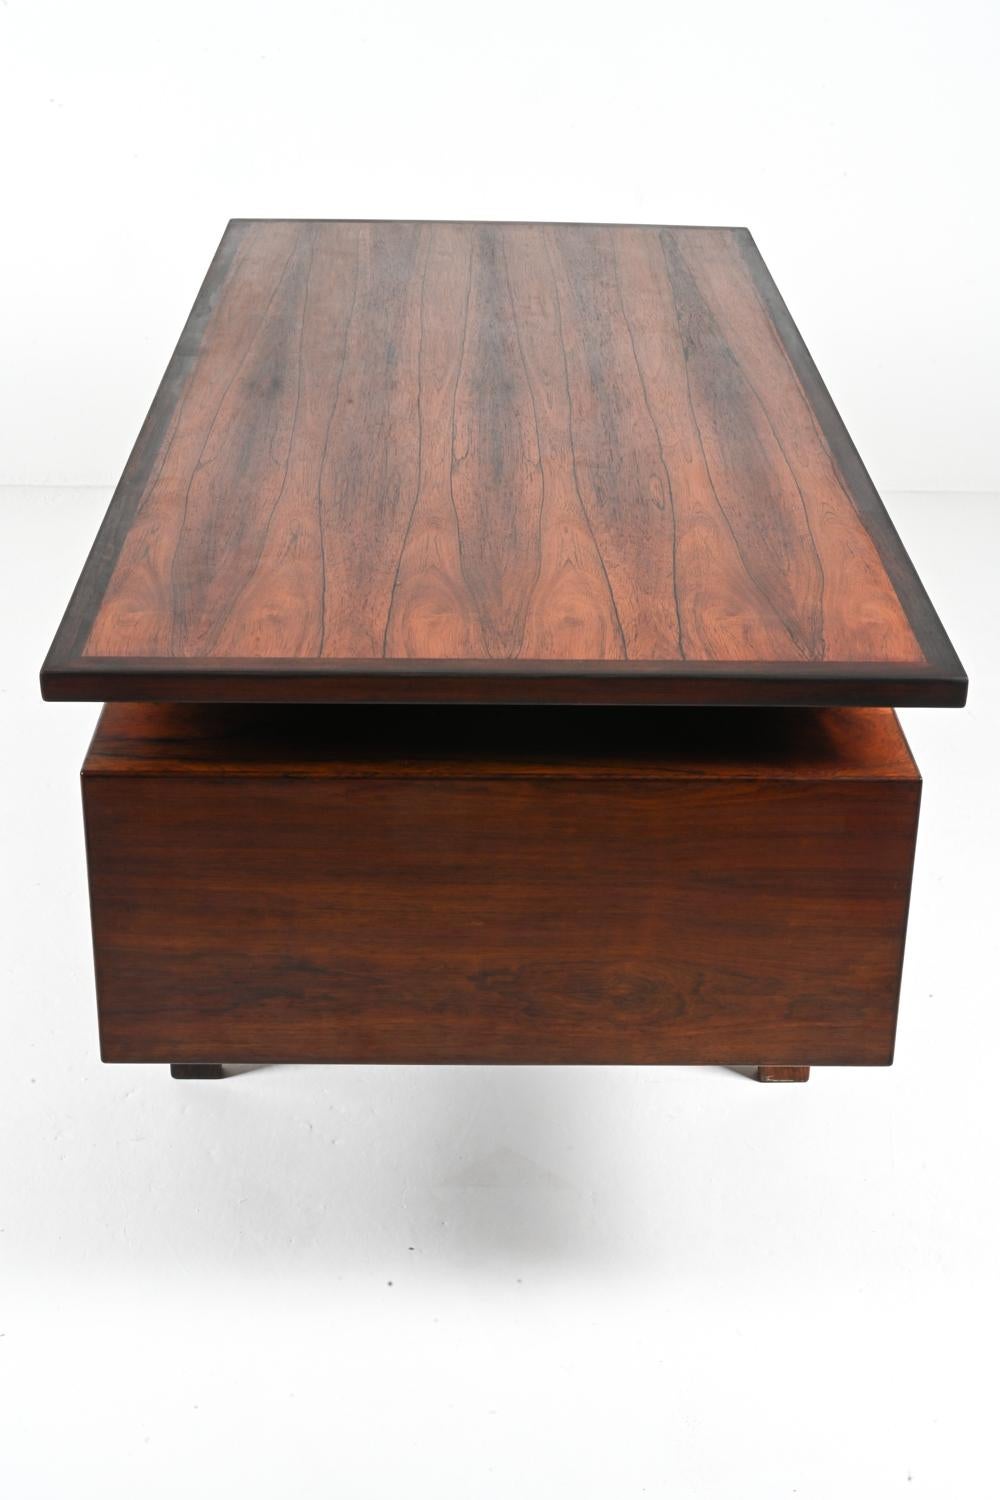 Rare Danish Rosewood Desk Attributed to Jorgen & Nanna Ditzel for Kolds Savvaerk For Sale 7